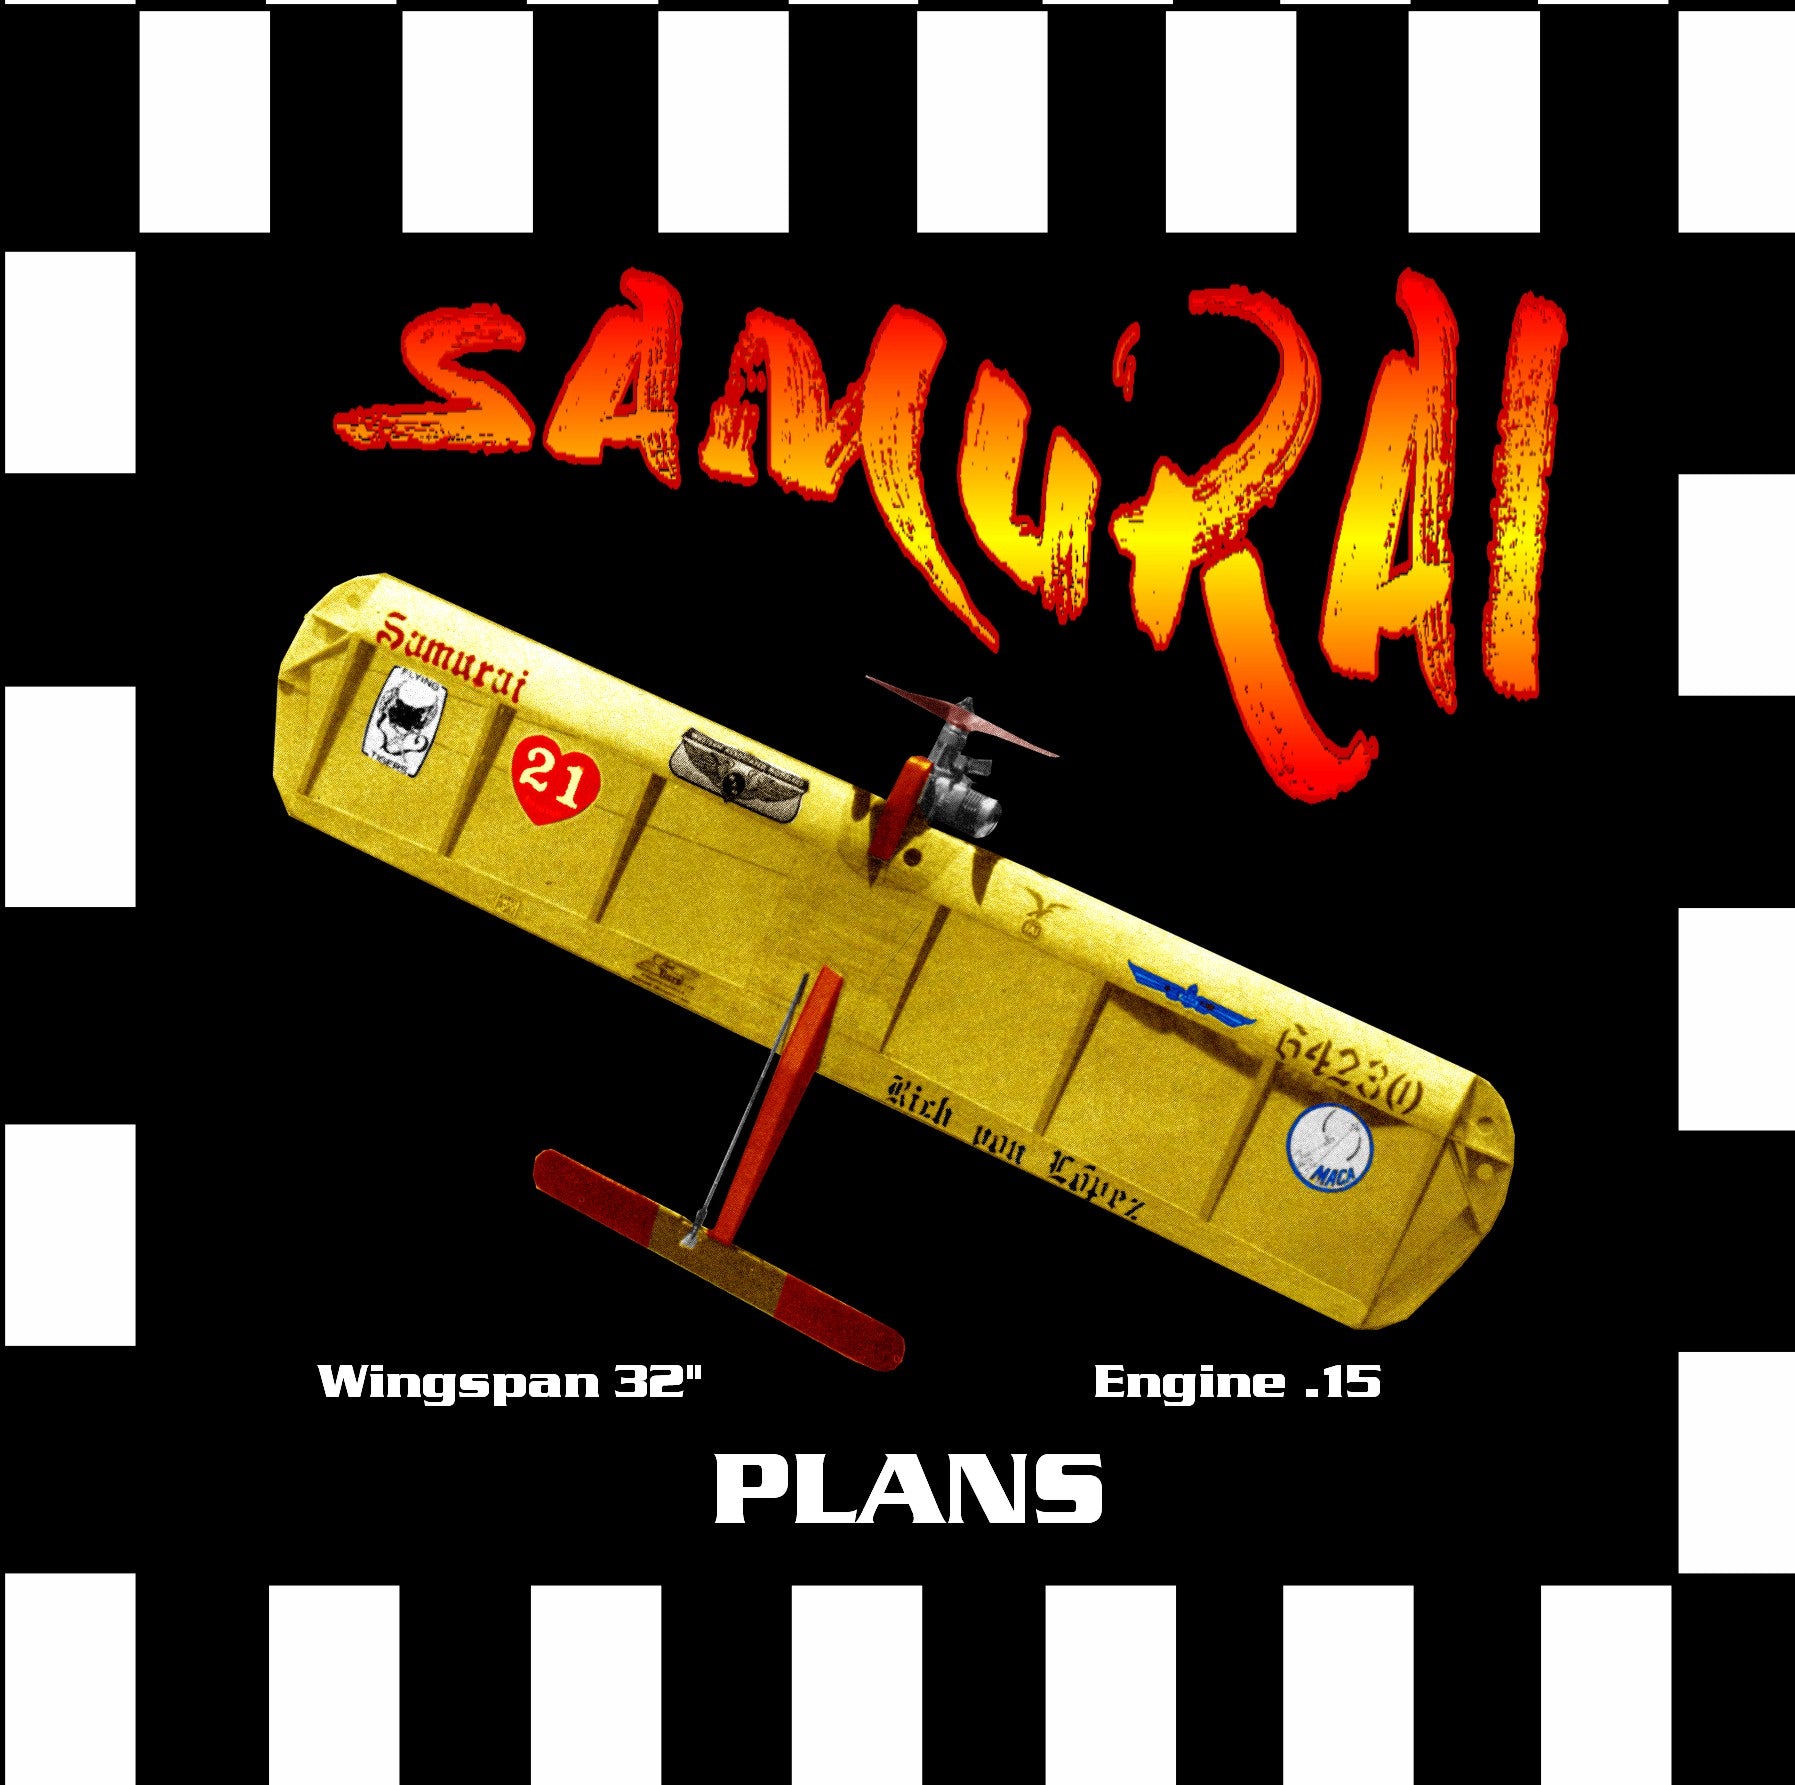 full size printed plan & building notes fai combat  ** samurai ** wingspan 32"  engine .15